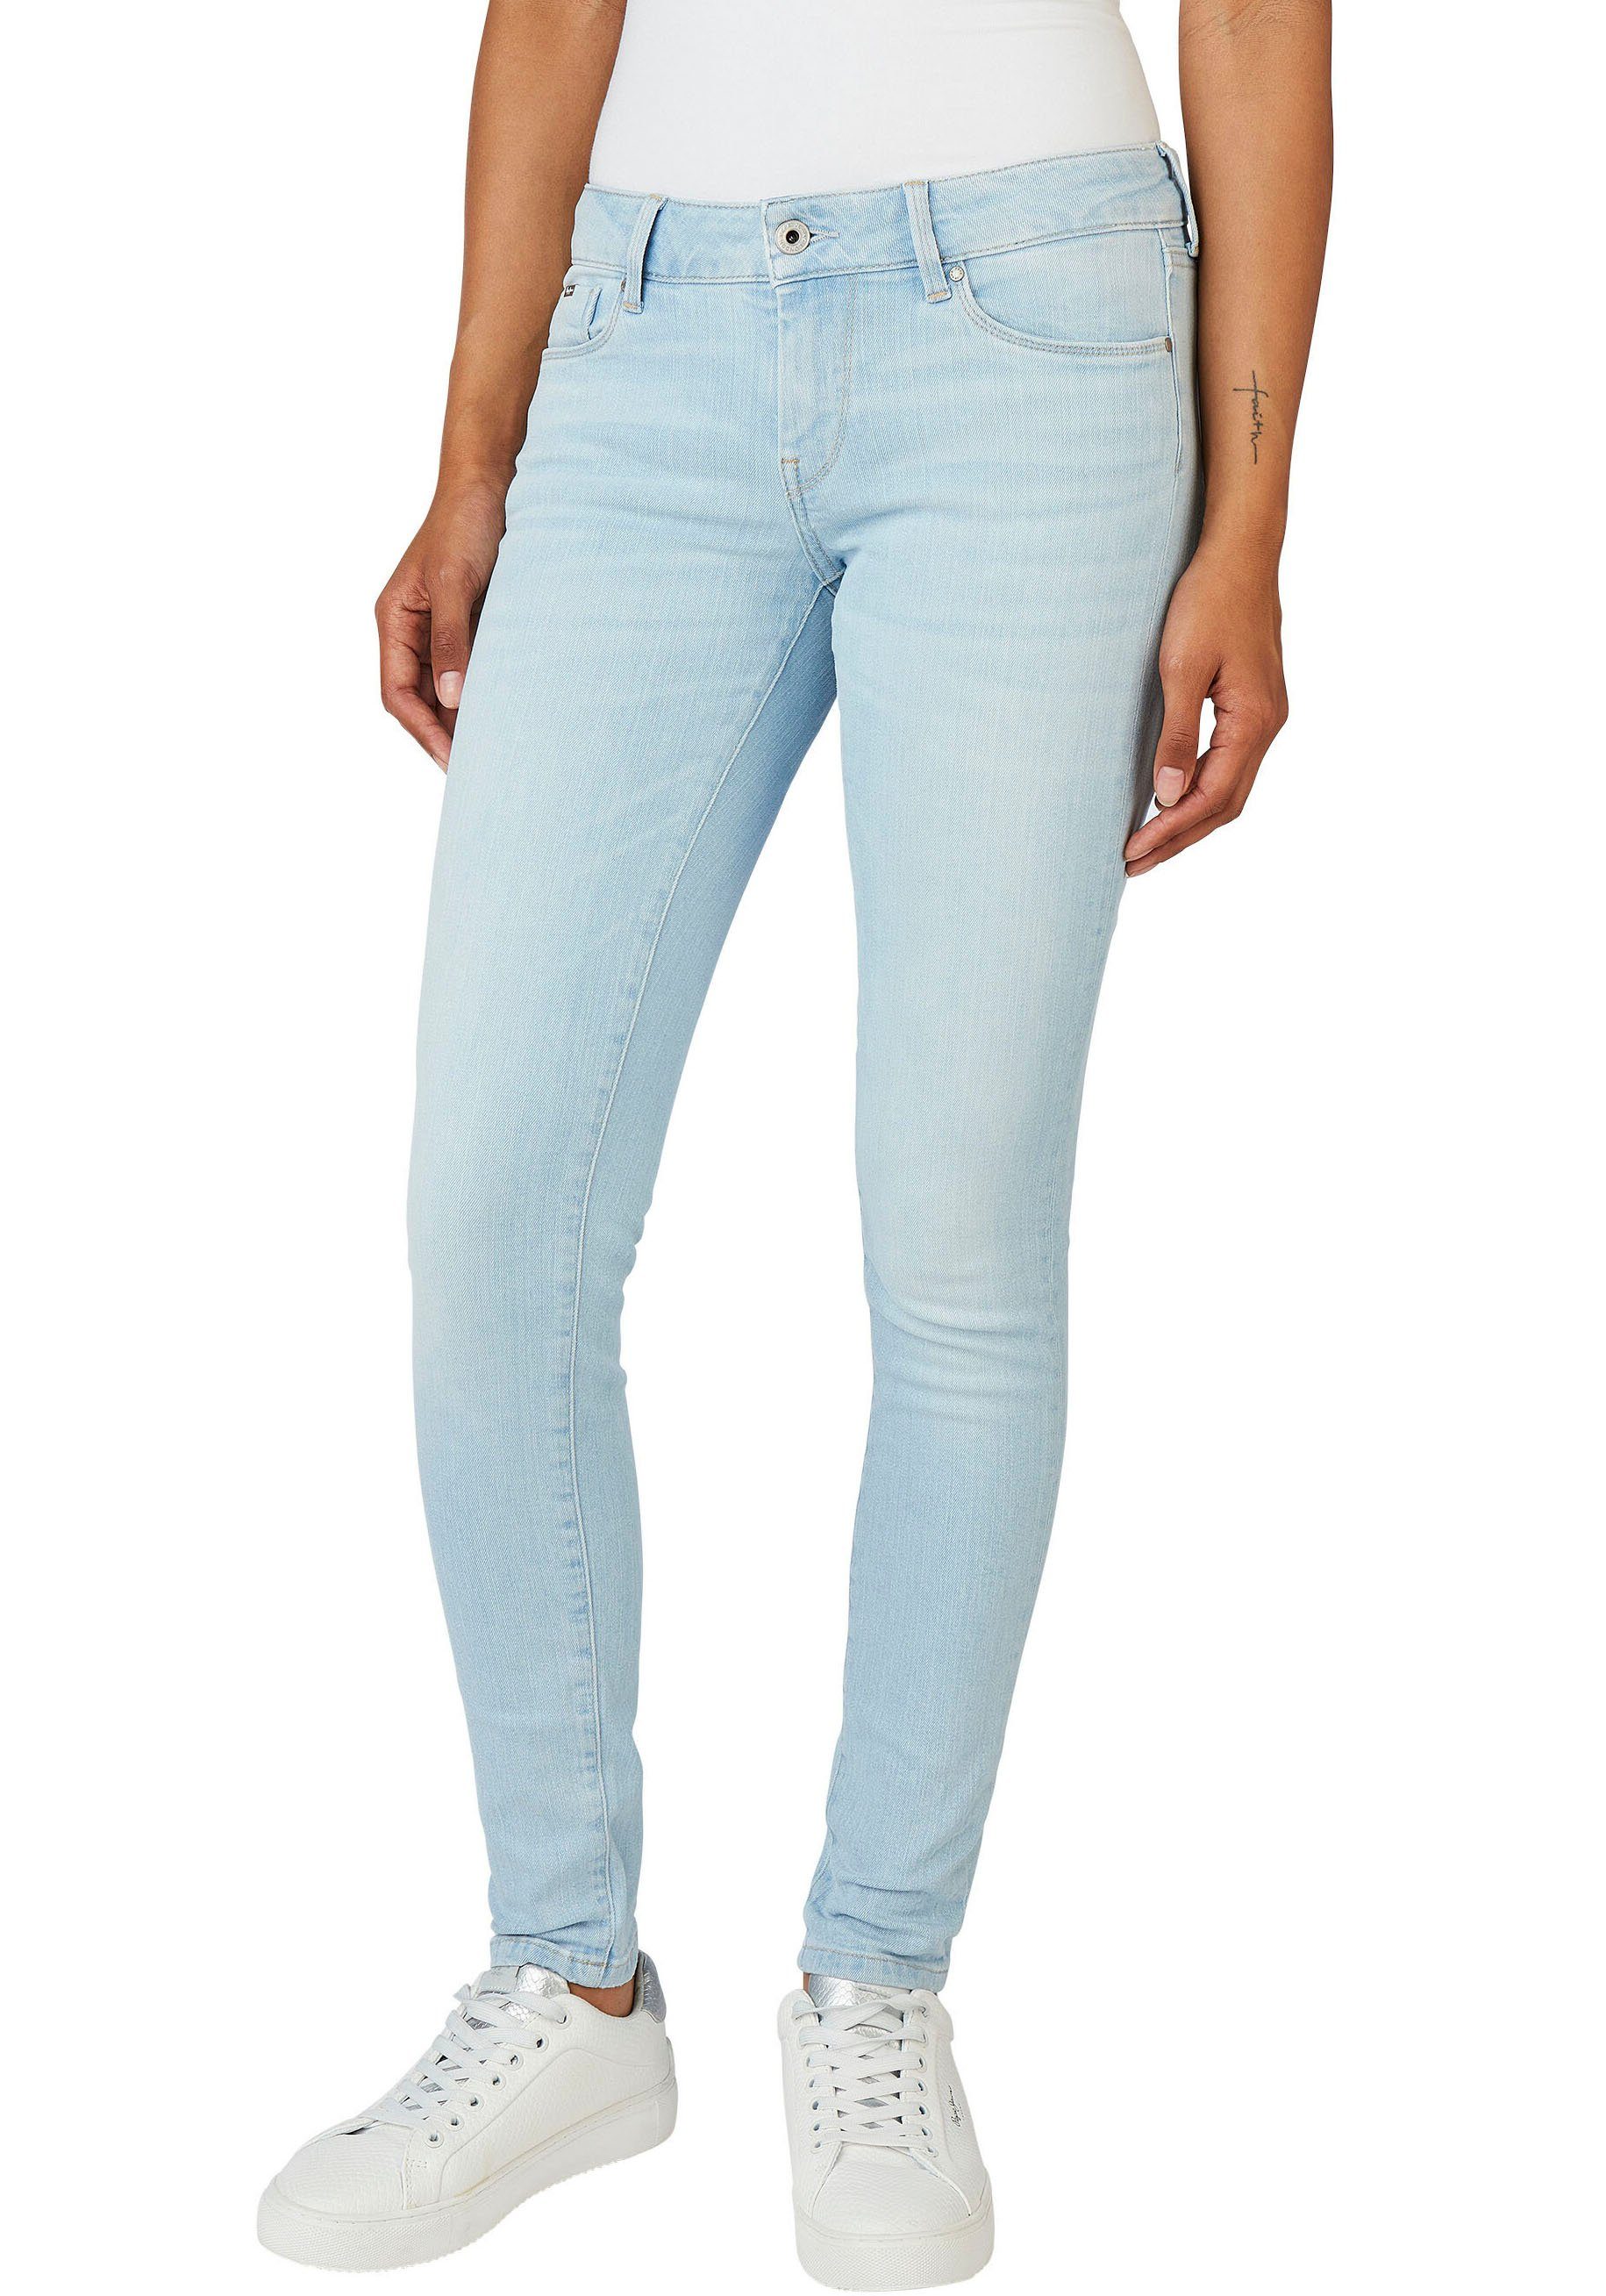 Pepe Jeans Skinny-fit-Jeans SOHO im 5-Pocket-Stil mit 1-Knopf Bund und Stretch-Anteil hell